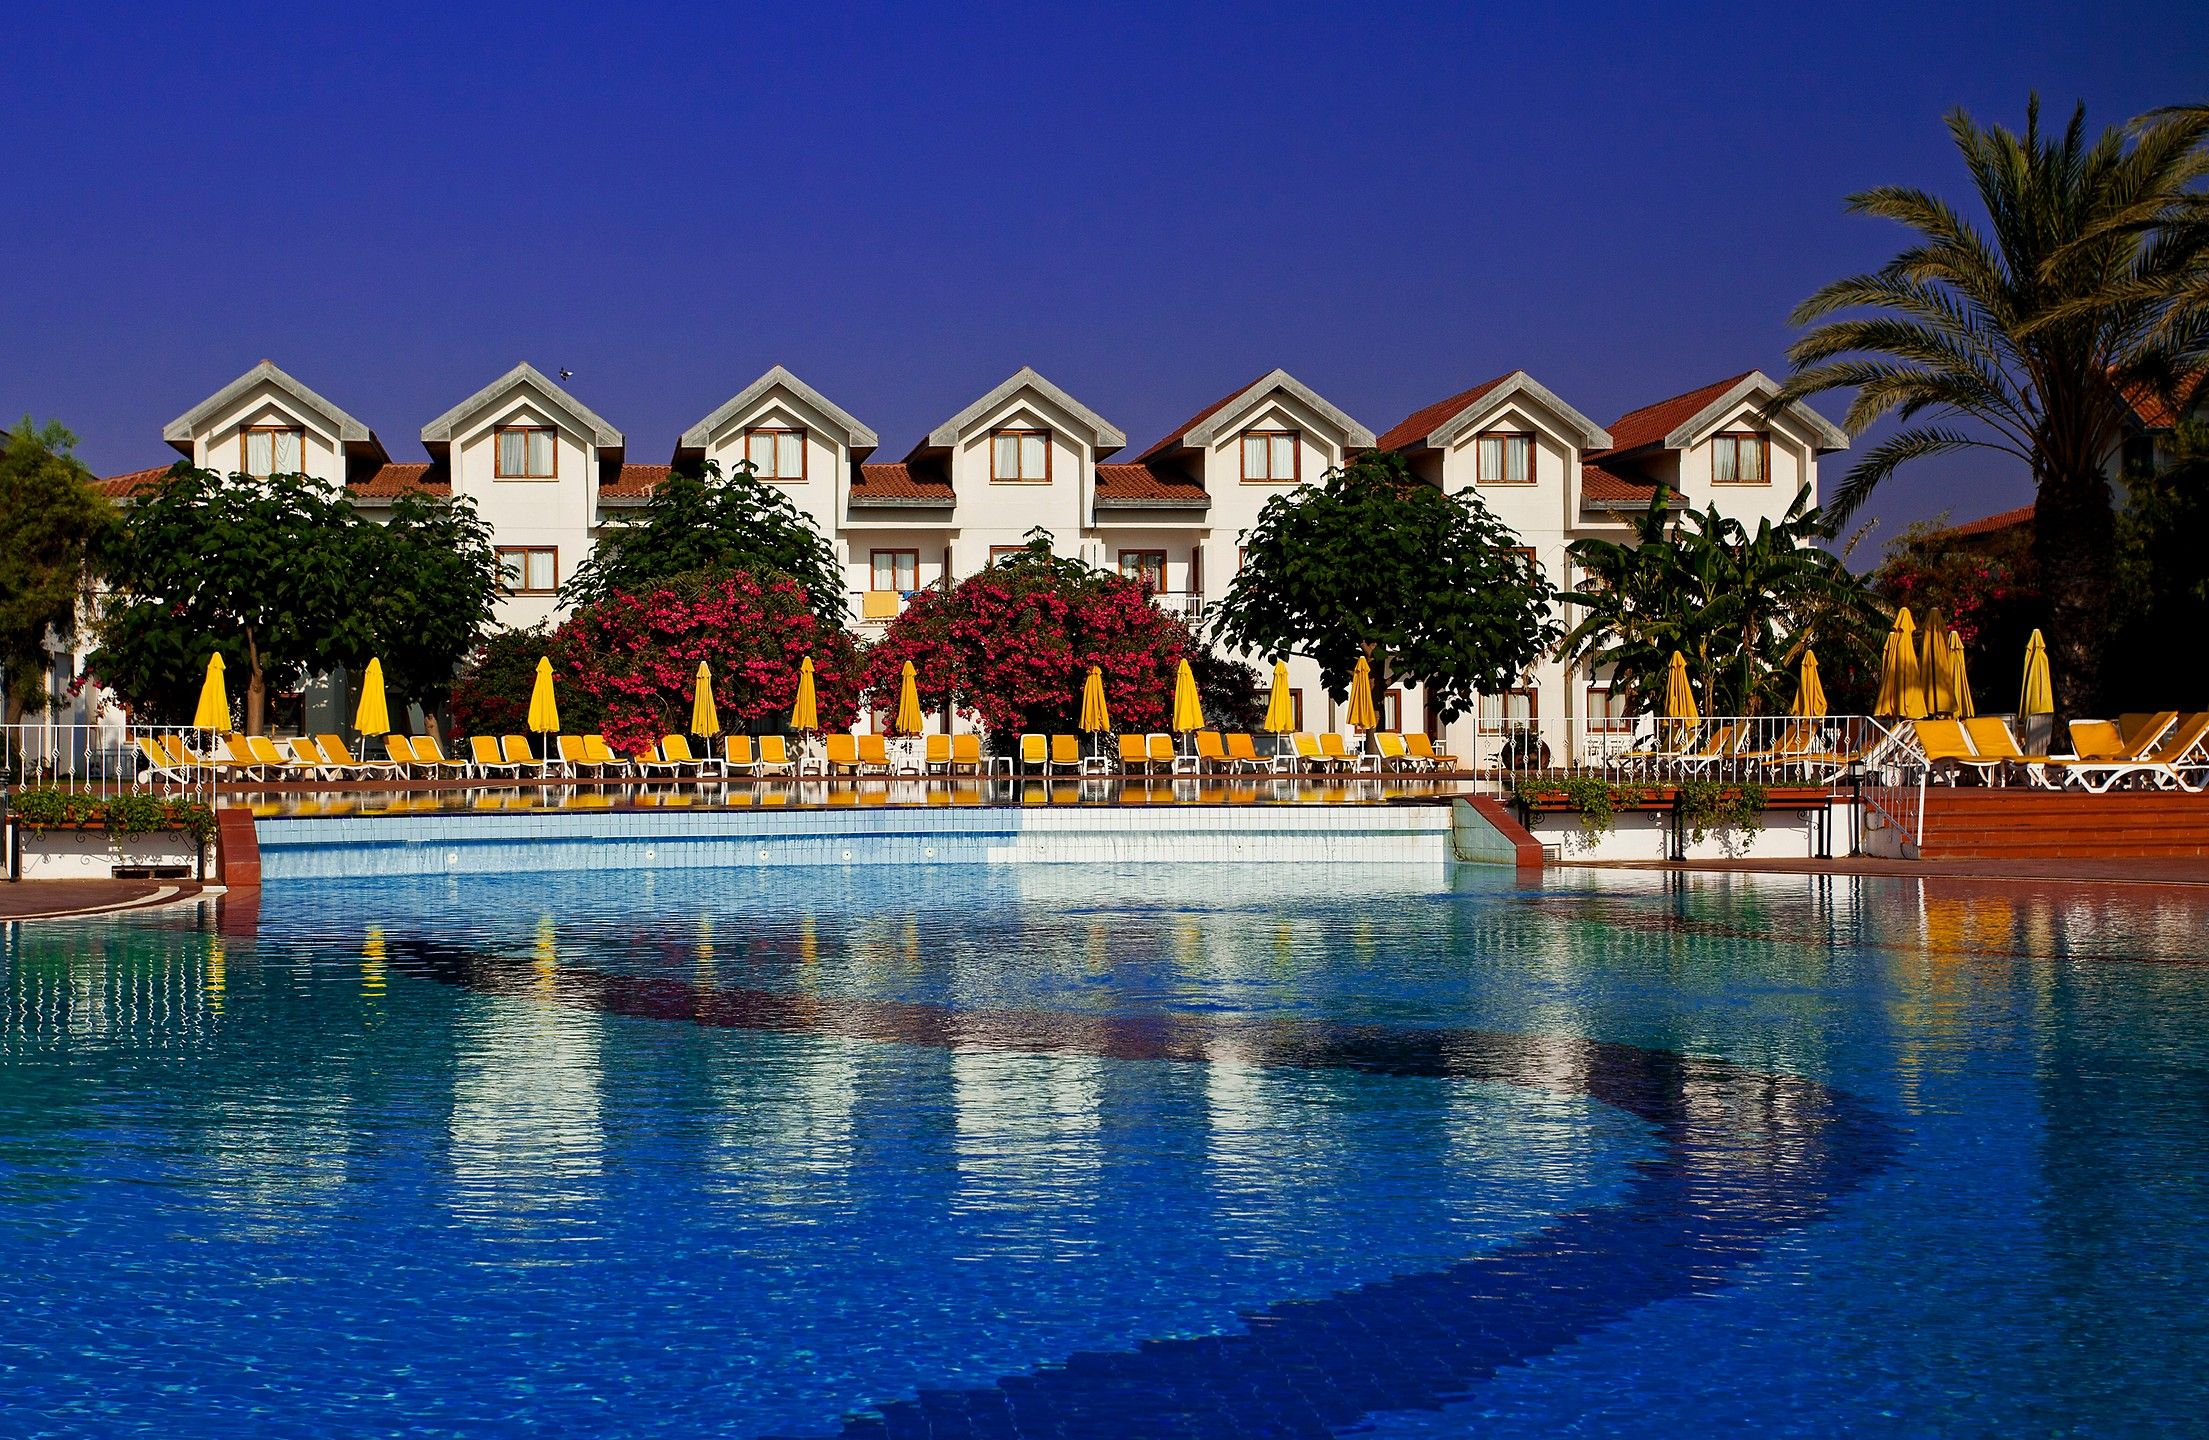 Salamis Bay Conti Hotel Casino Yılbaşı Programı